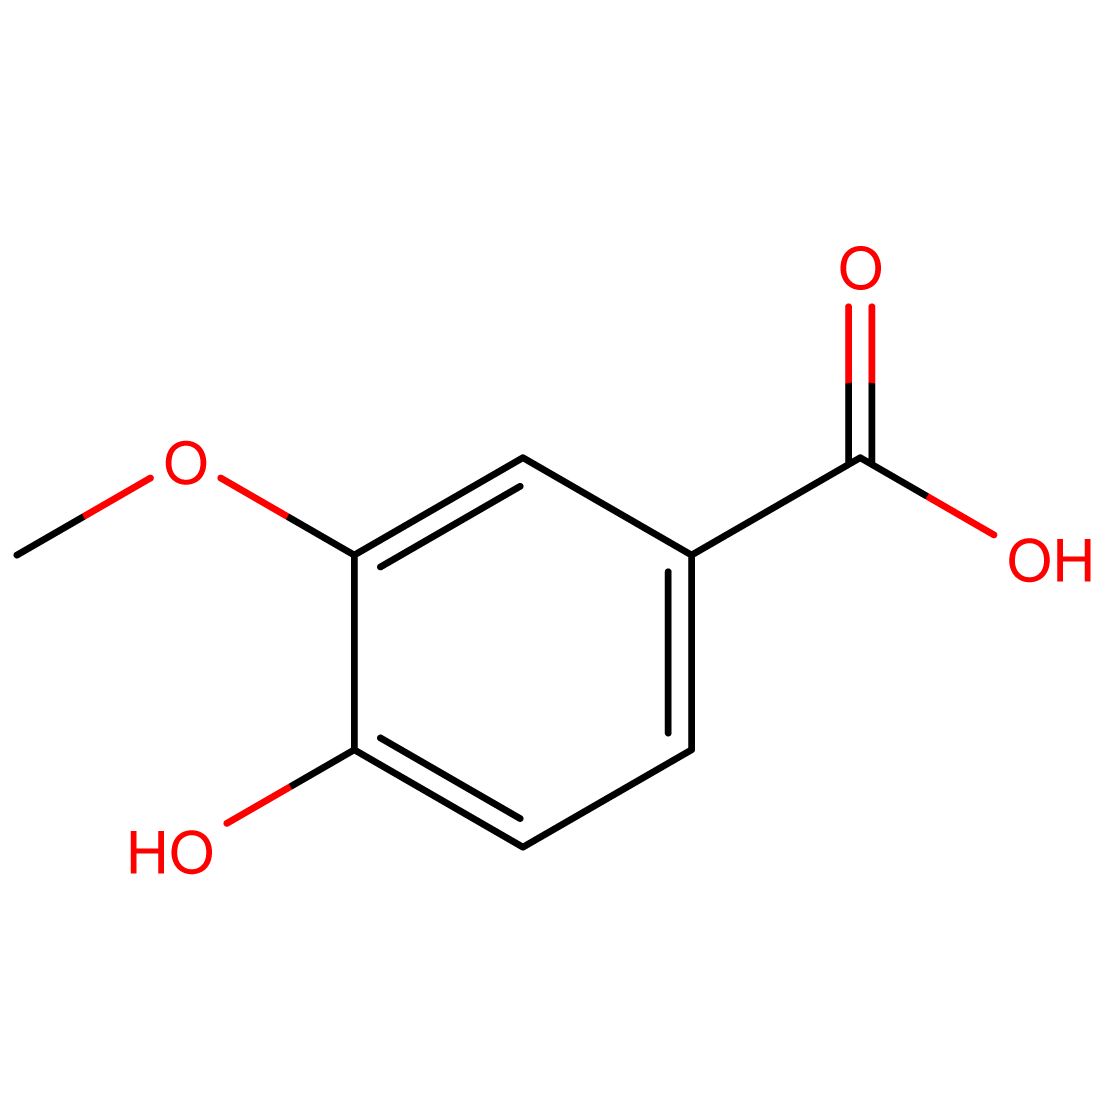 Vanillic Acid CAS 121-34-6